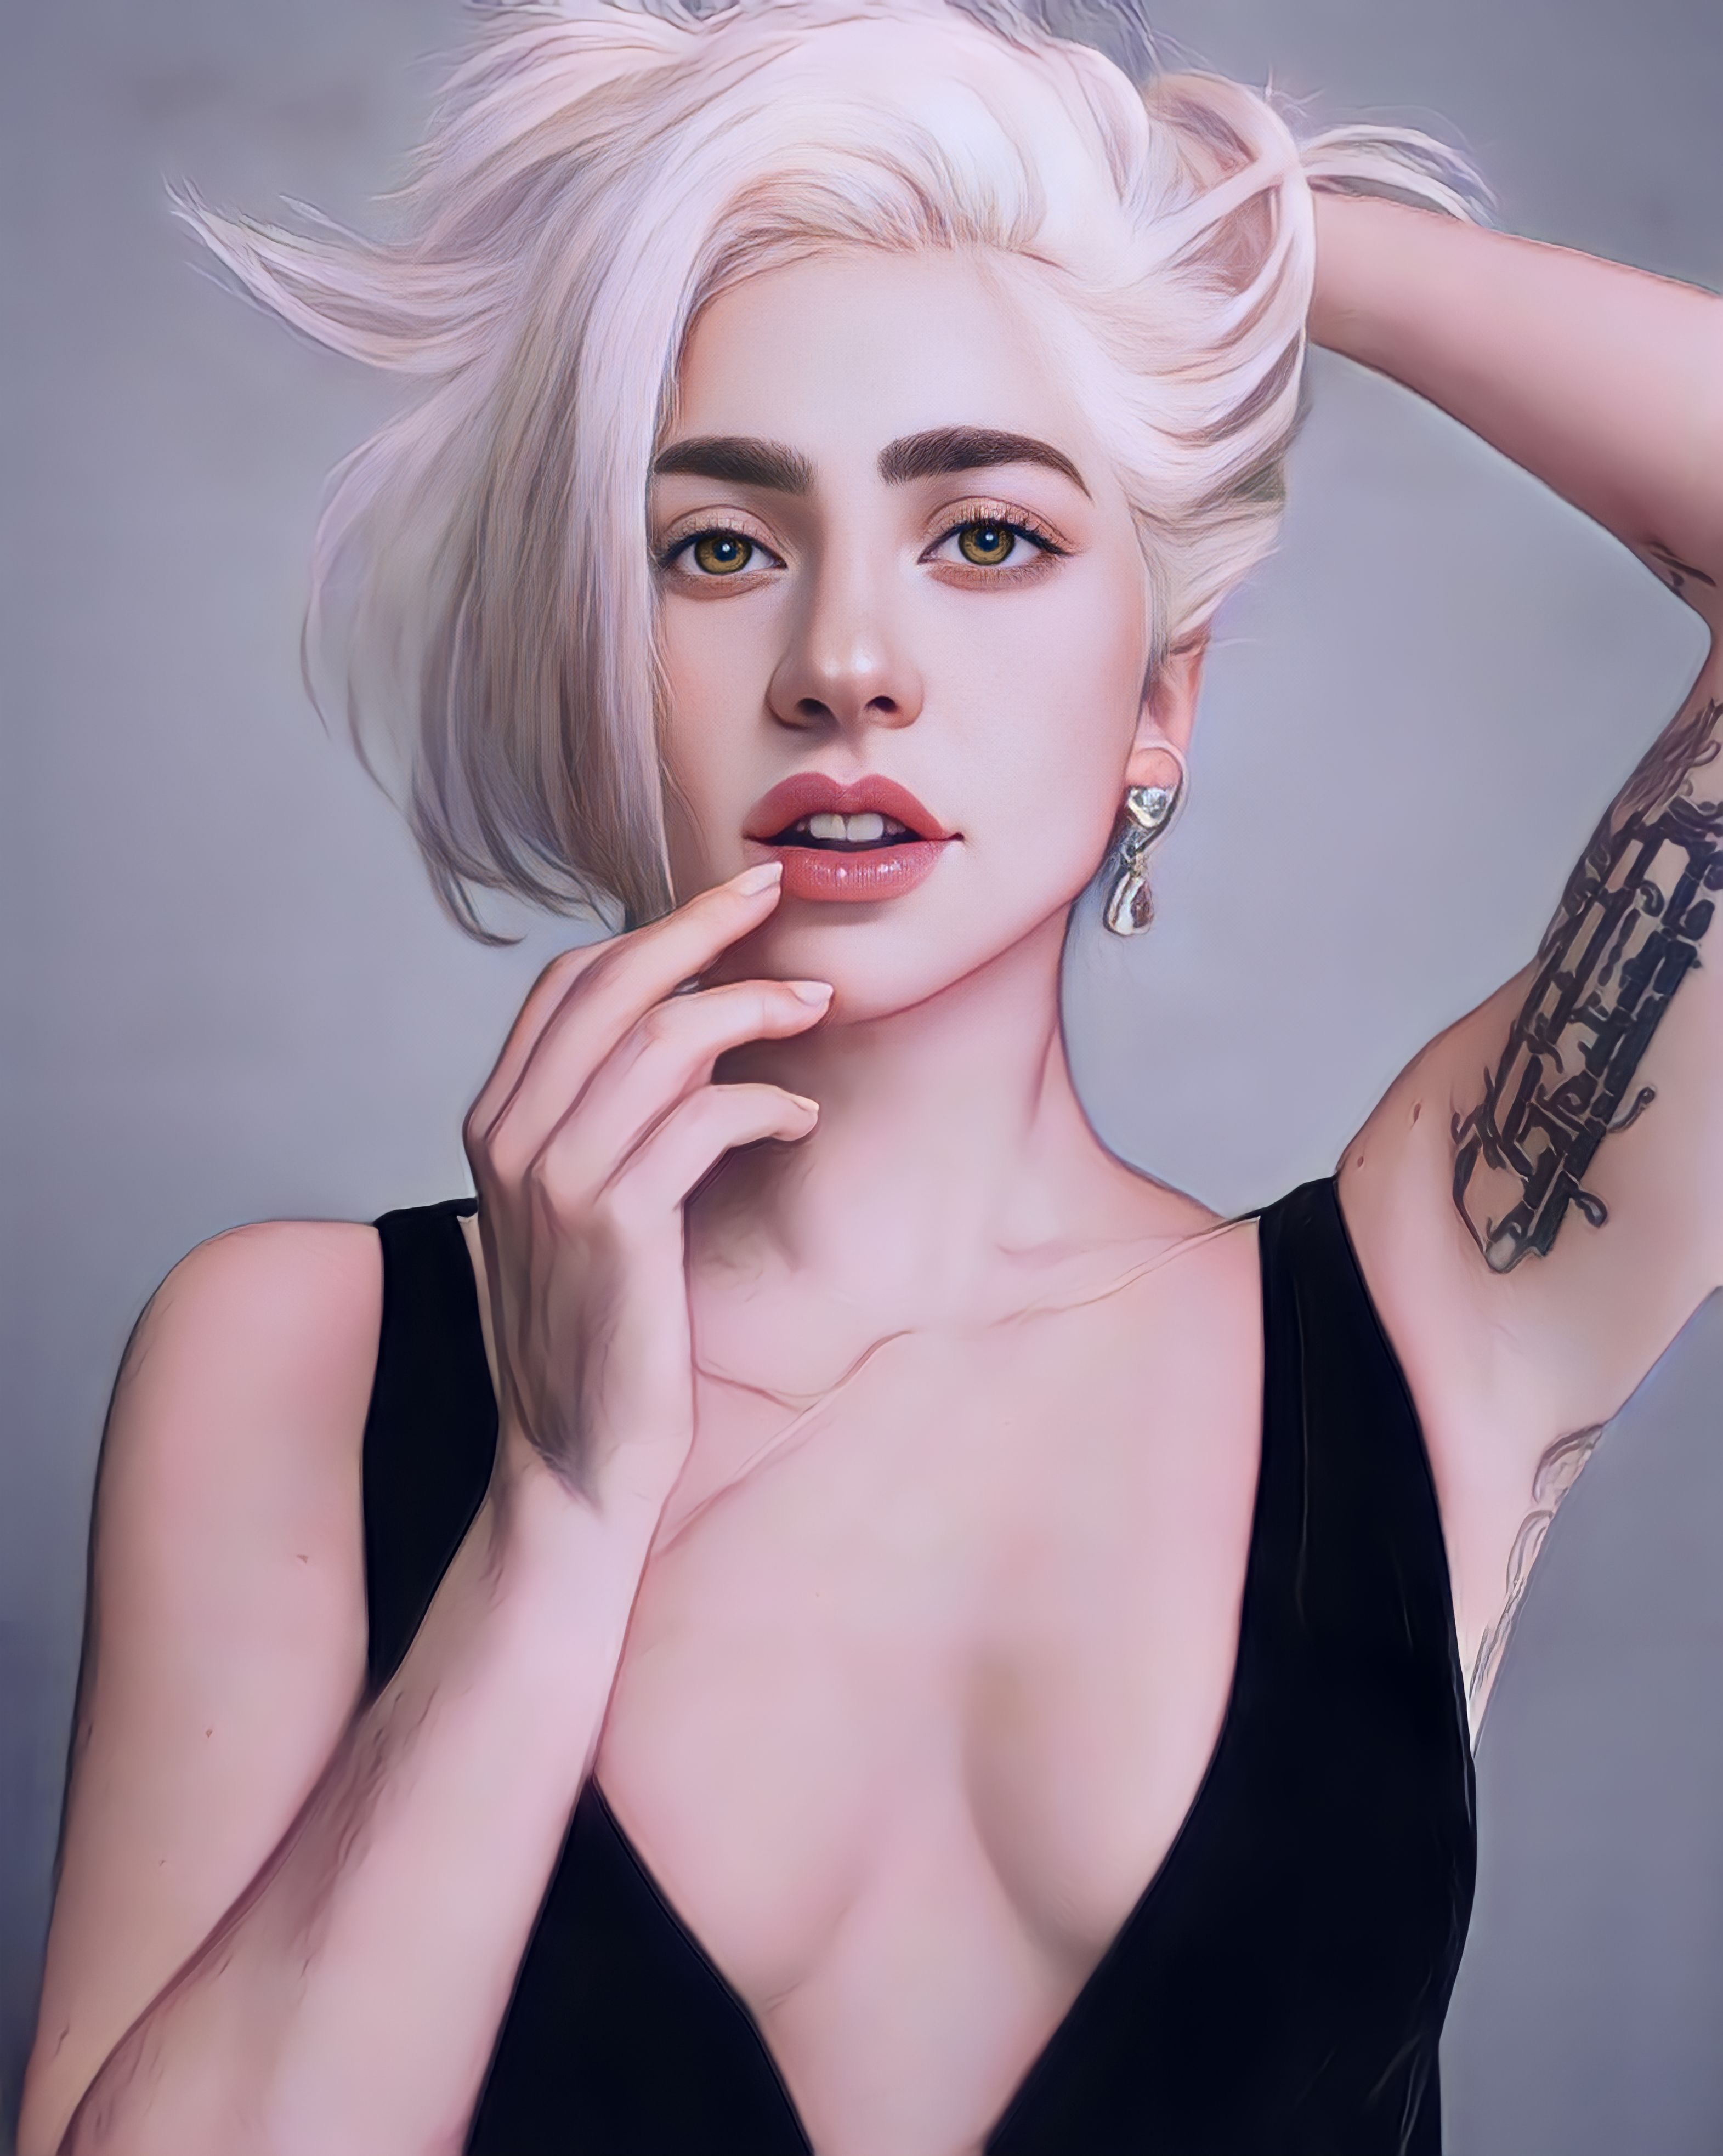 Lady Gaga by Celebcartoonizer on DeviantArt